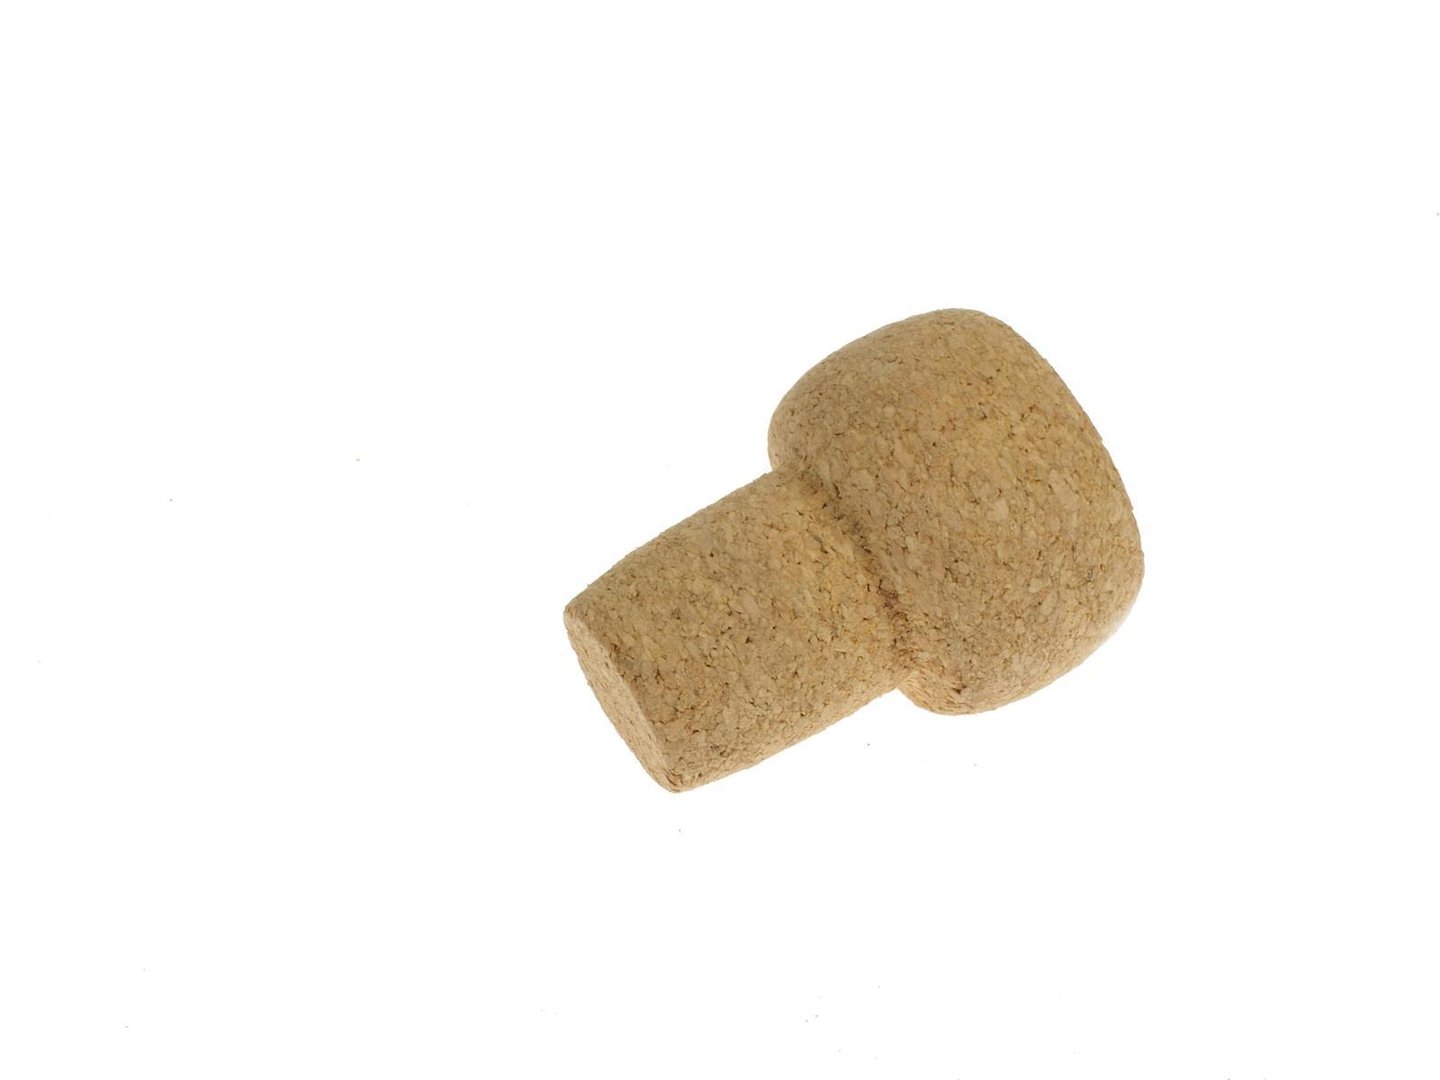 7490 M Mushroom cork From pressed cork